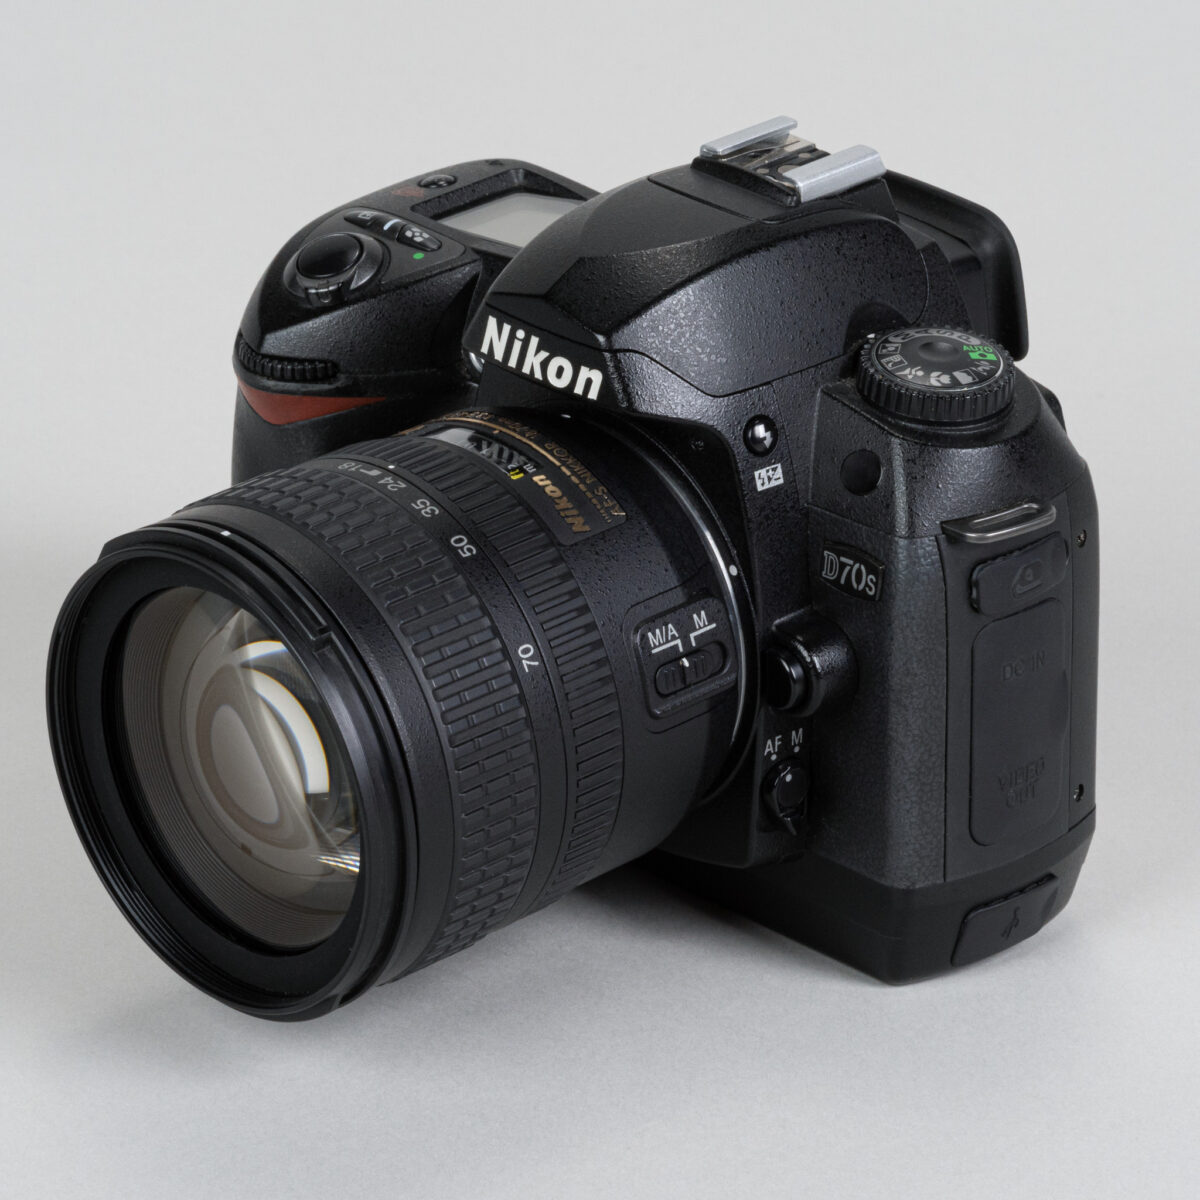 Nikon D70s Set 1-4